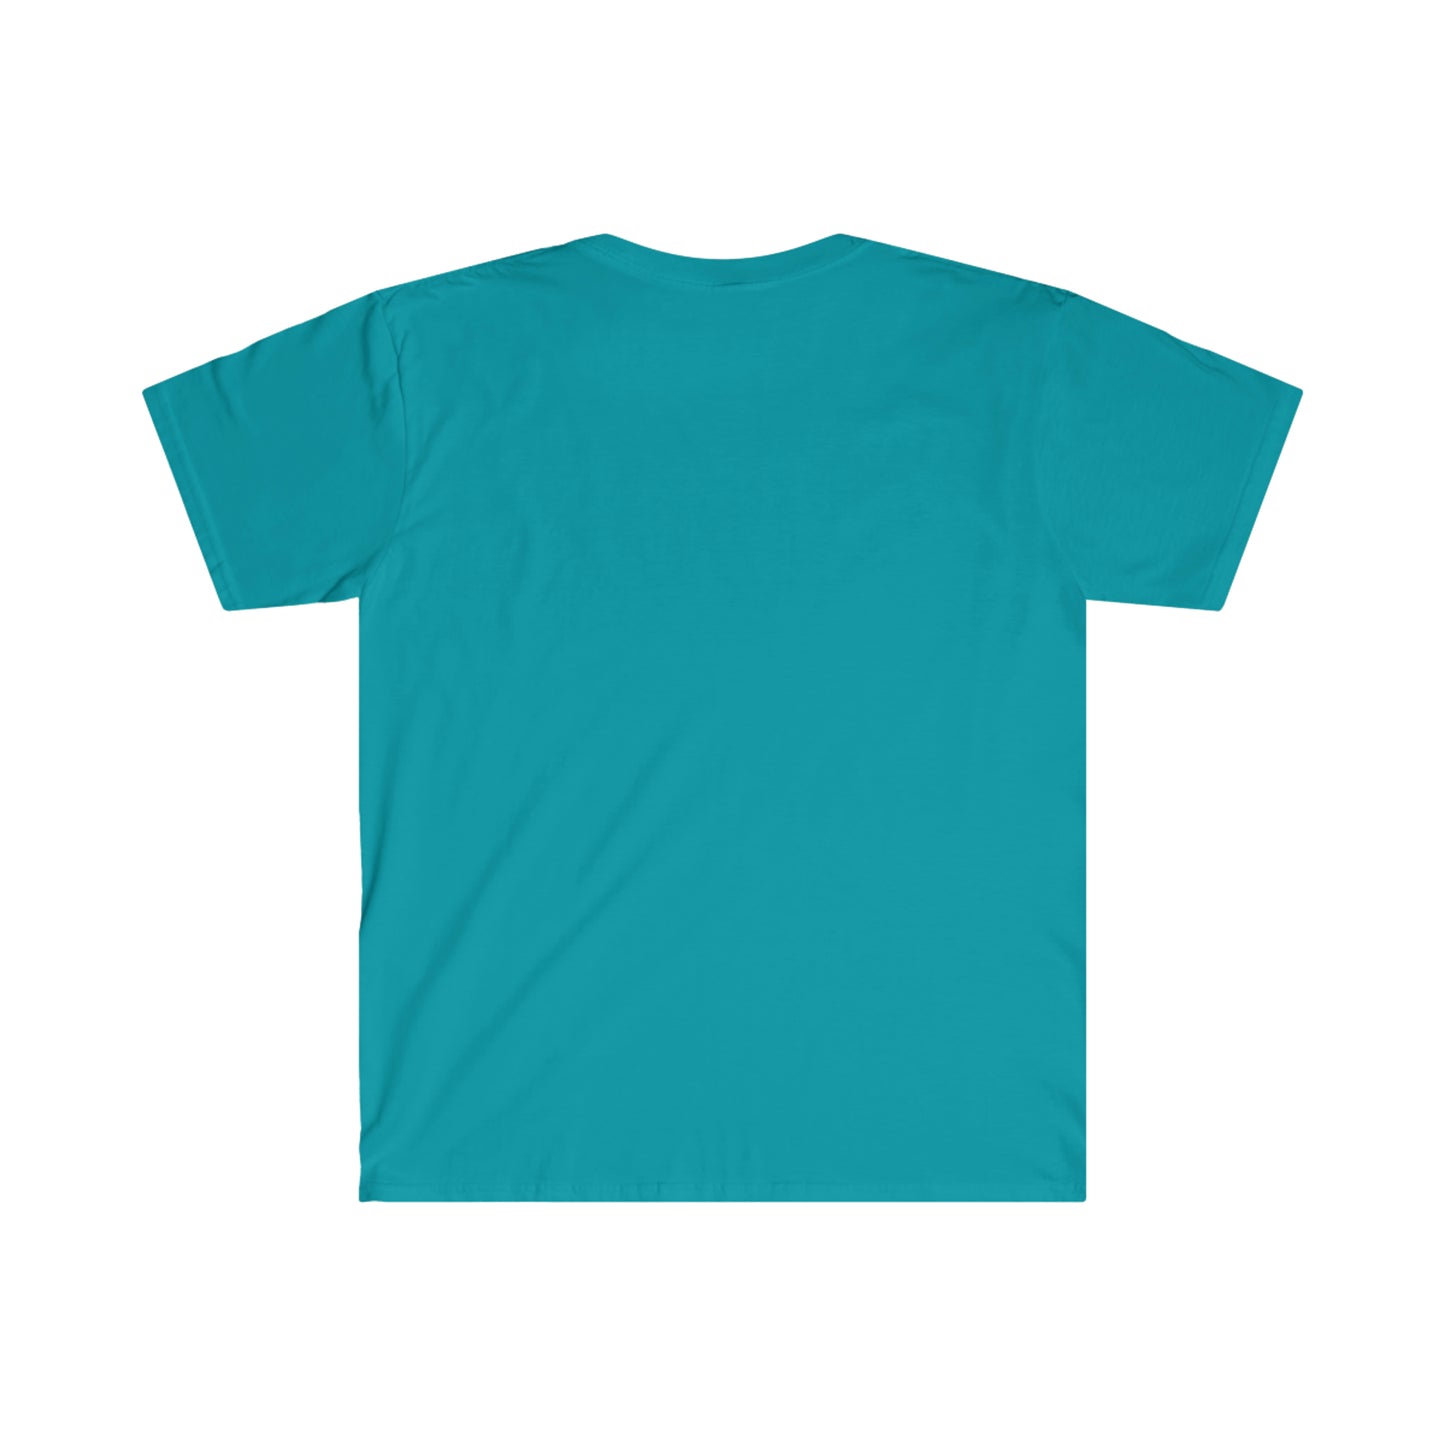 Retro Games Unisex Softstyle T-Shirt